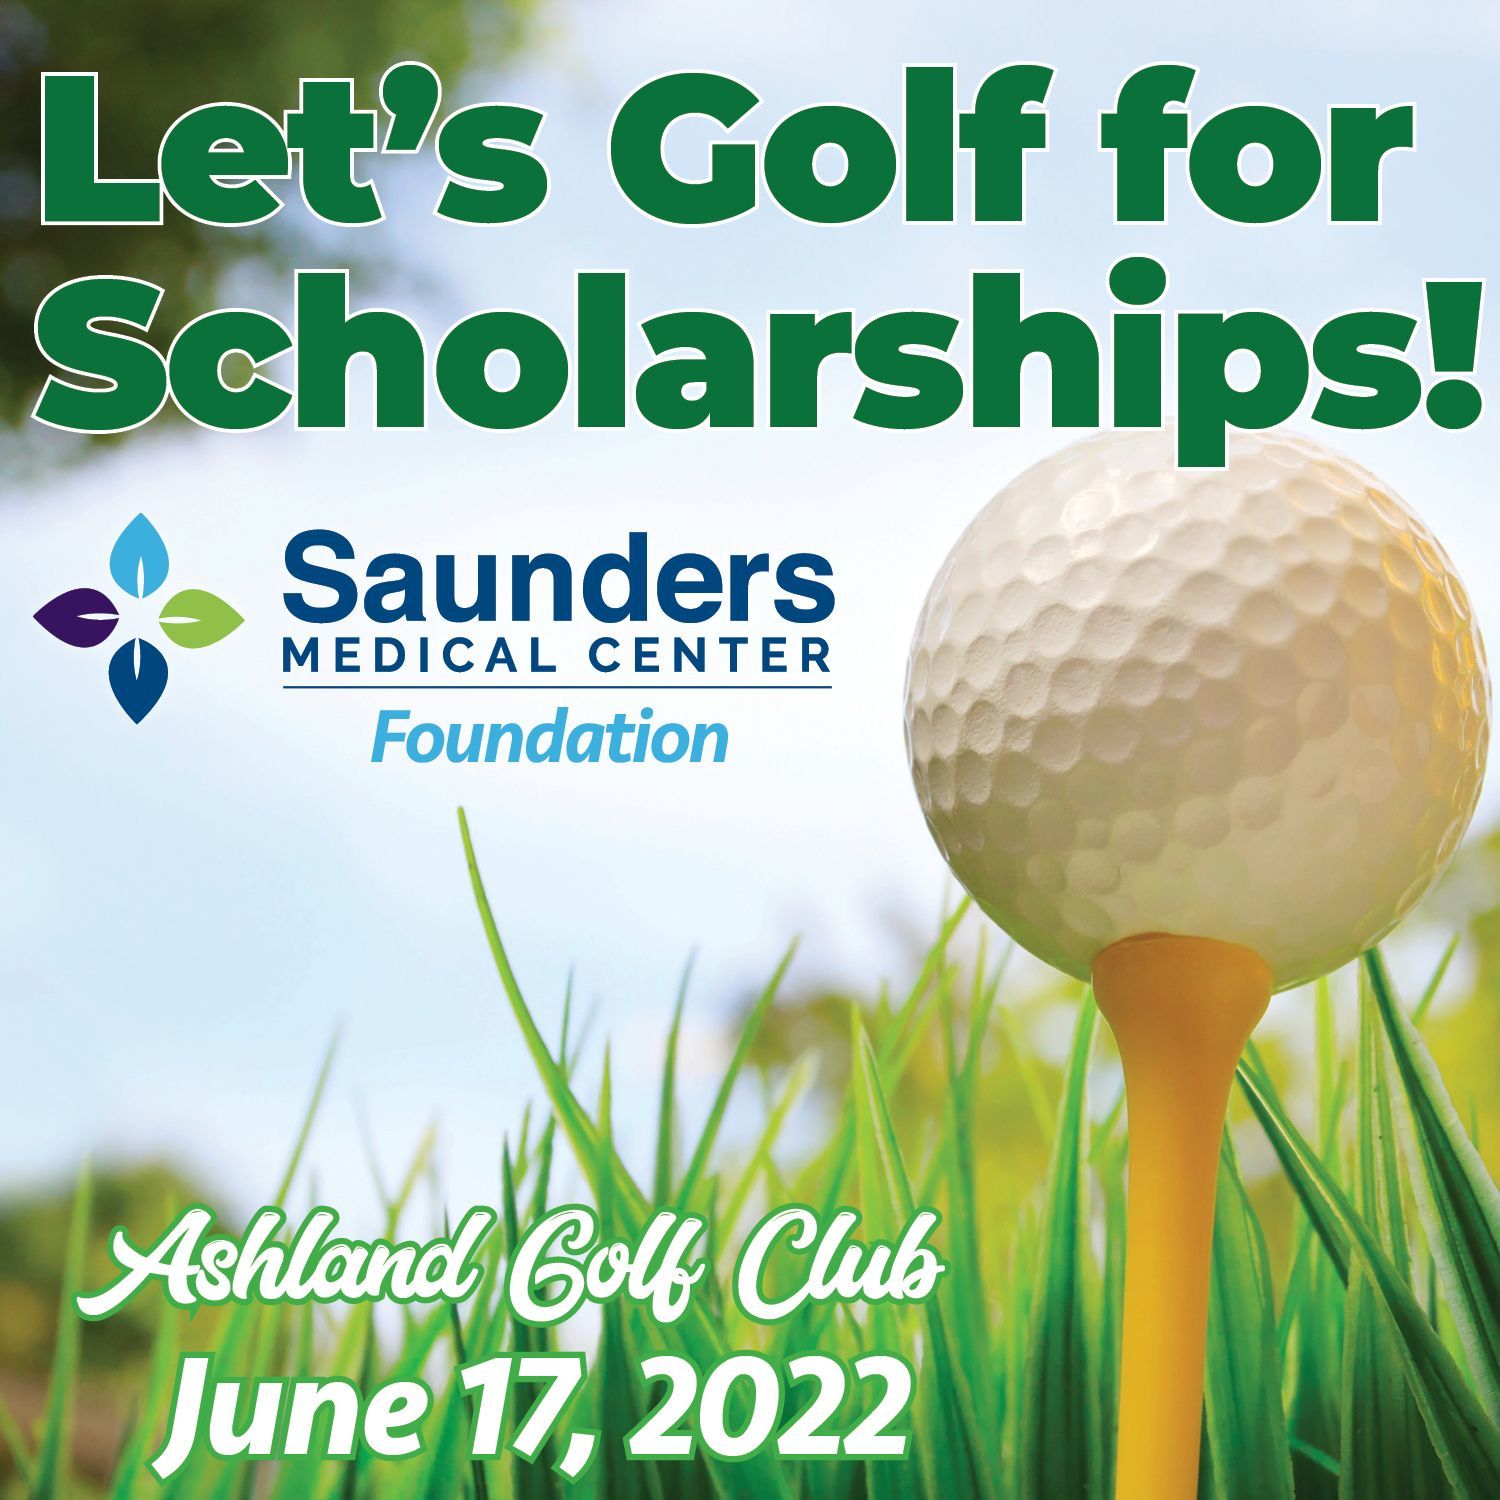 Let's Golf for Scholarships!